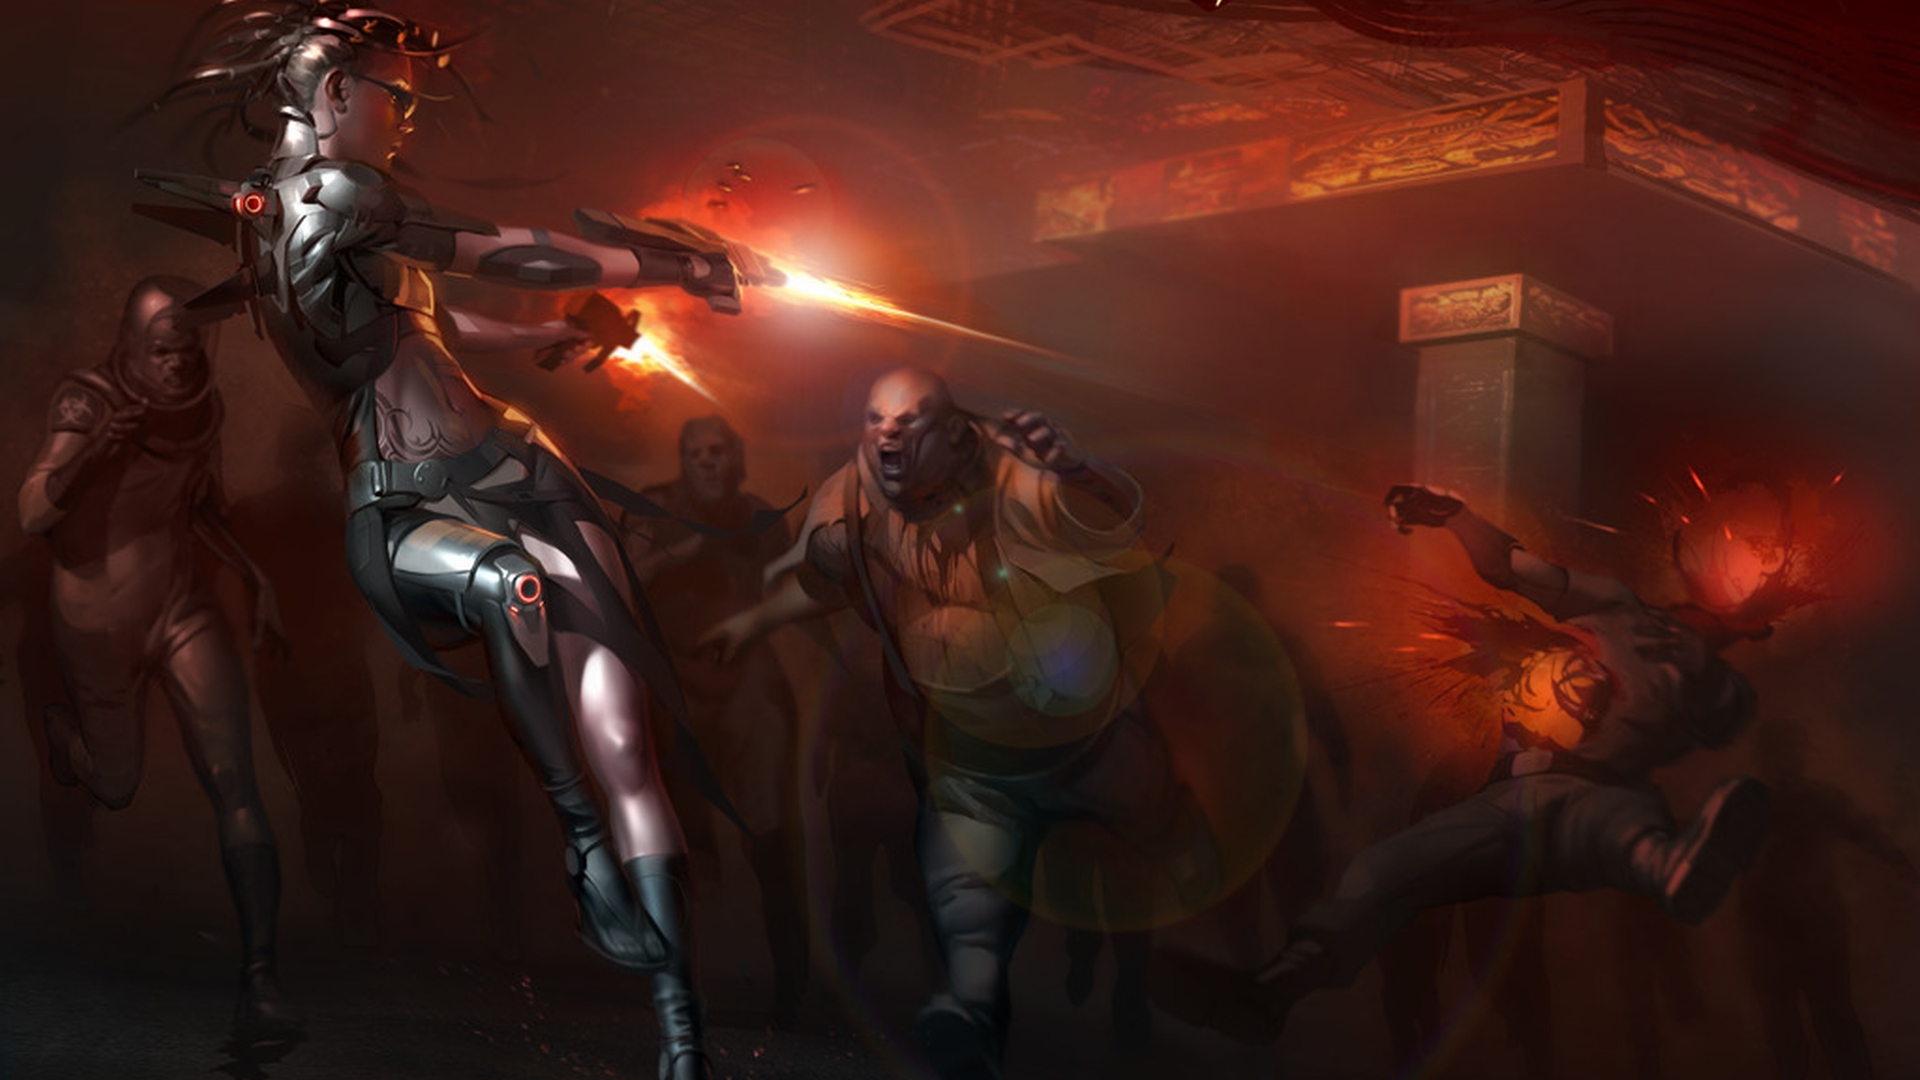 Sci Fi female warrior with guns in dark armor. Desktop wallpaper.